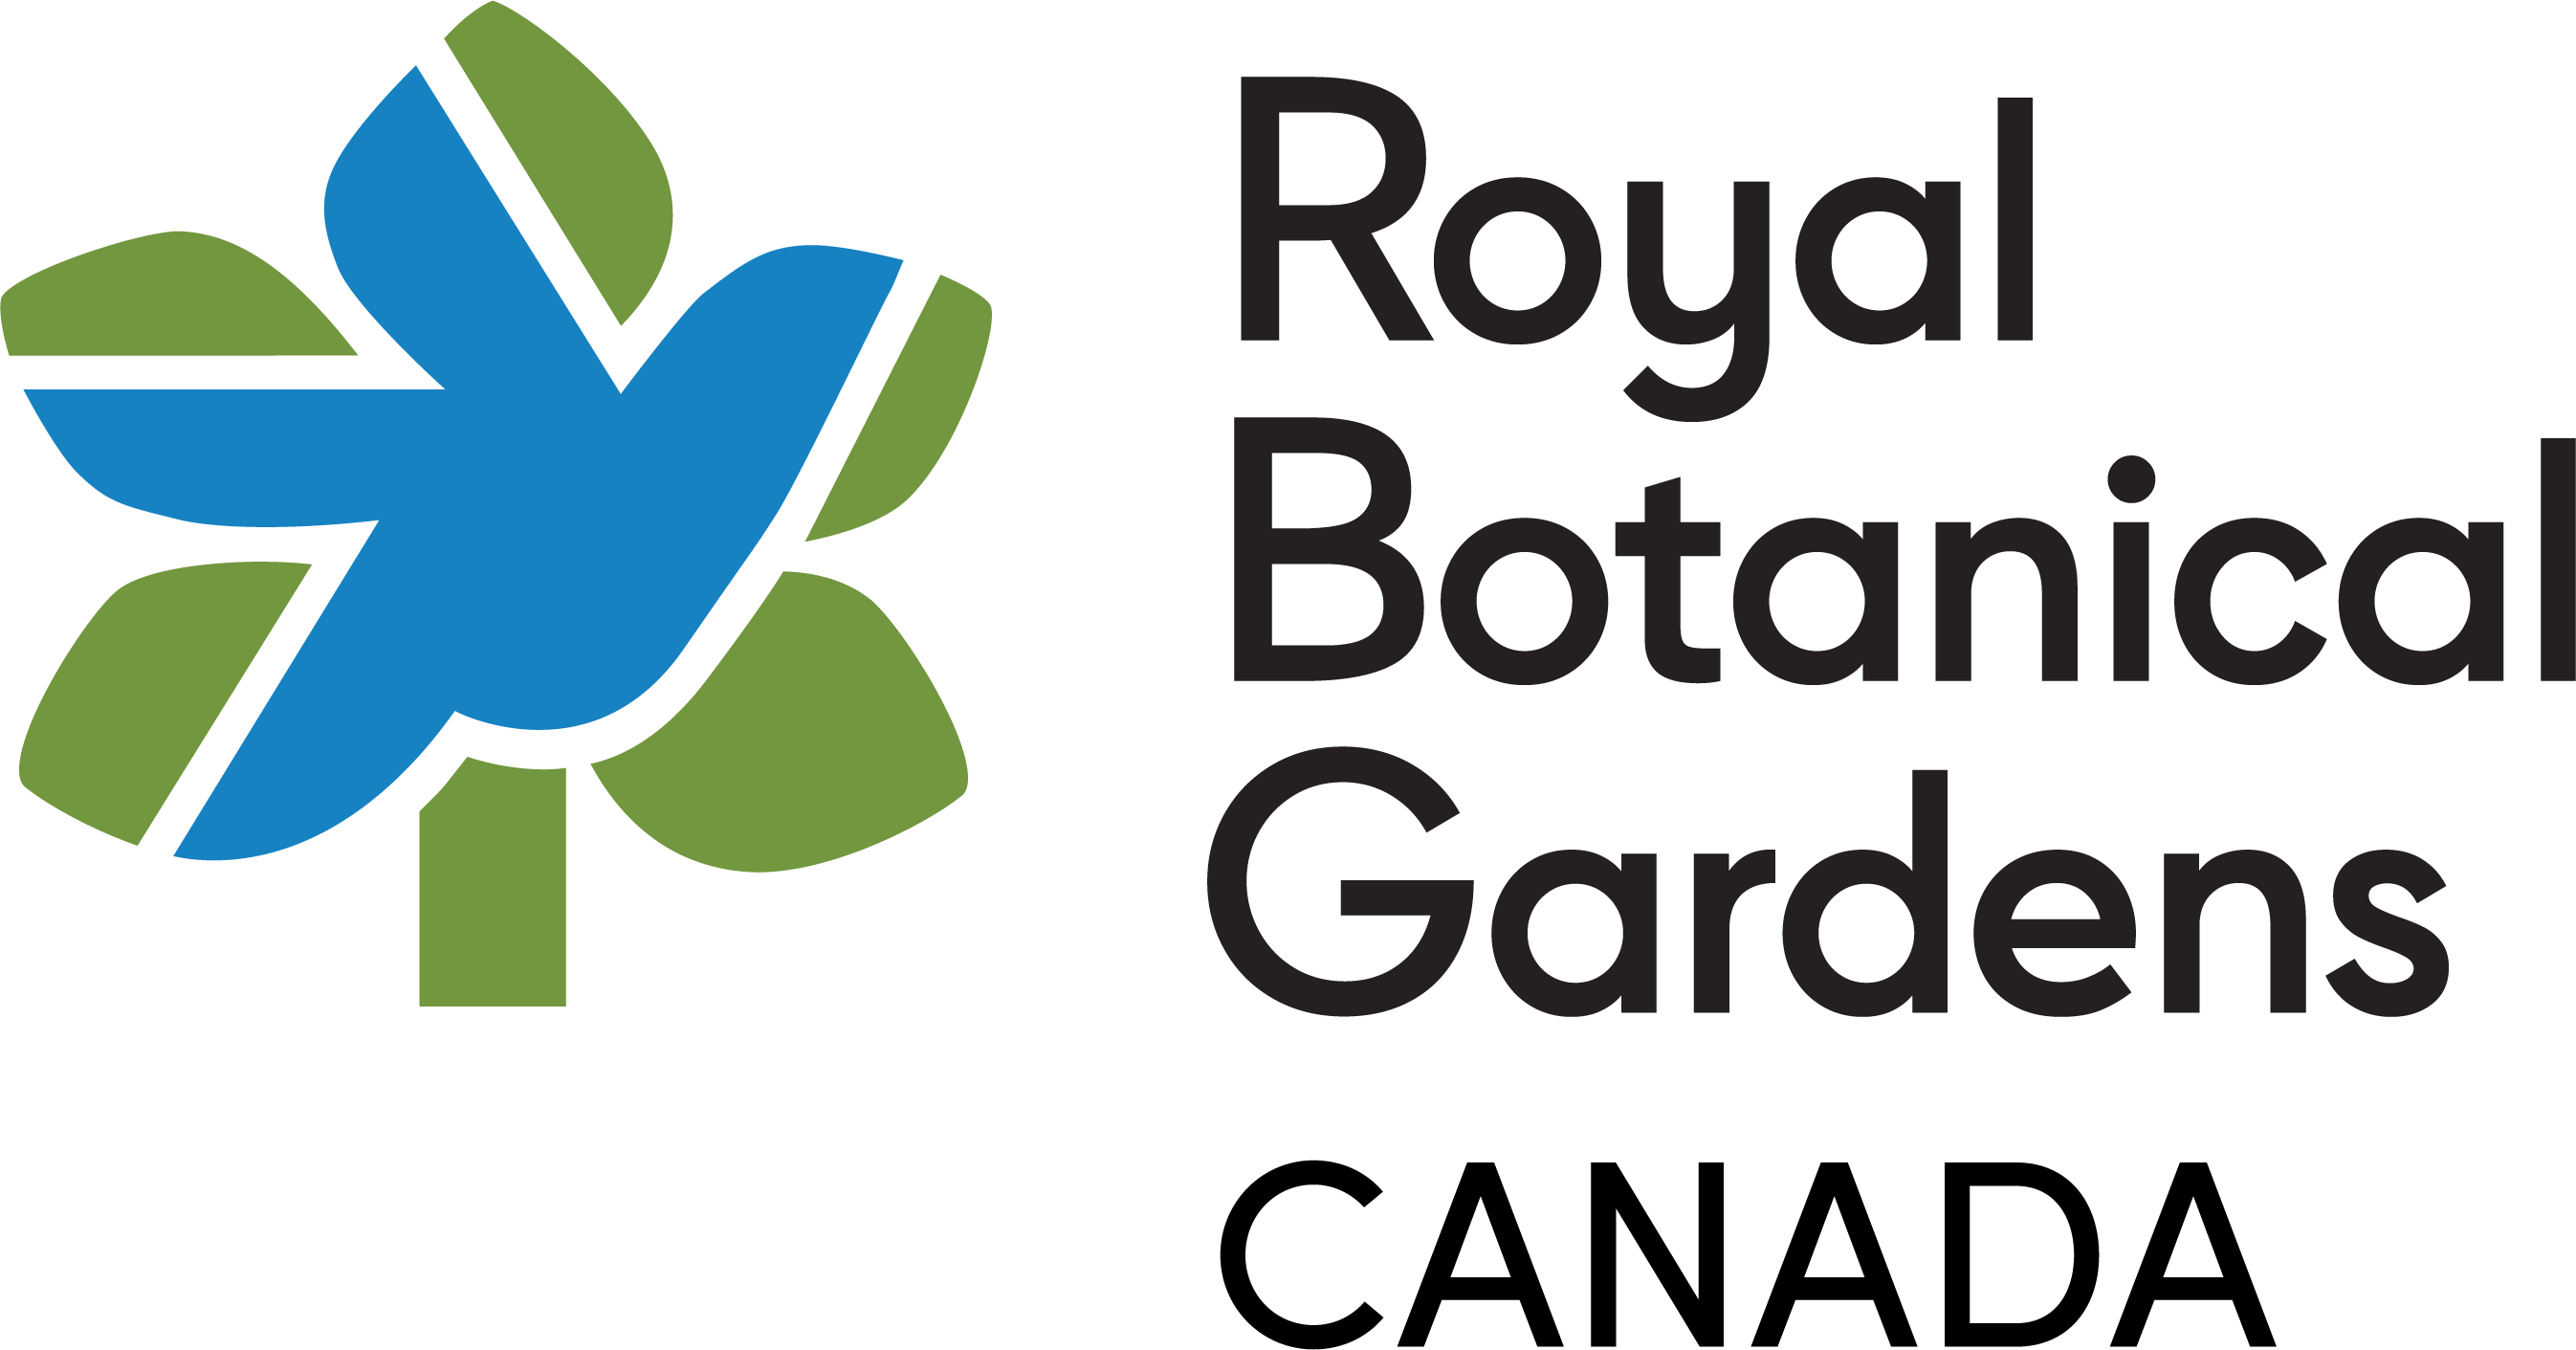 royal botanical gardens logo with bird and leaf motif